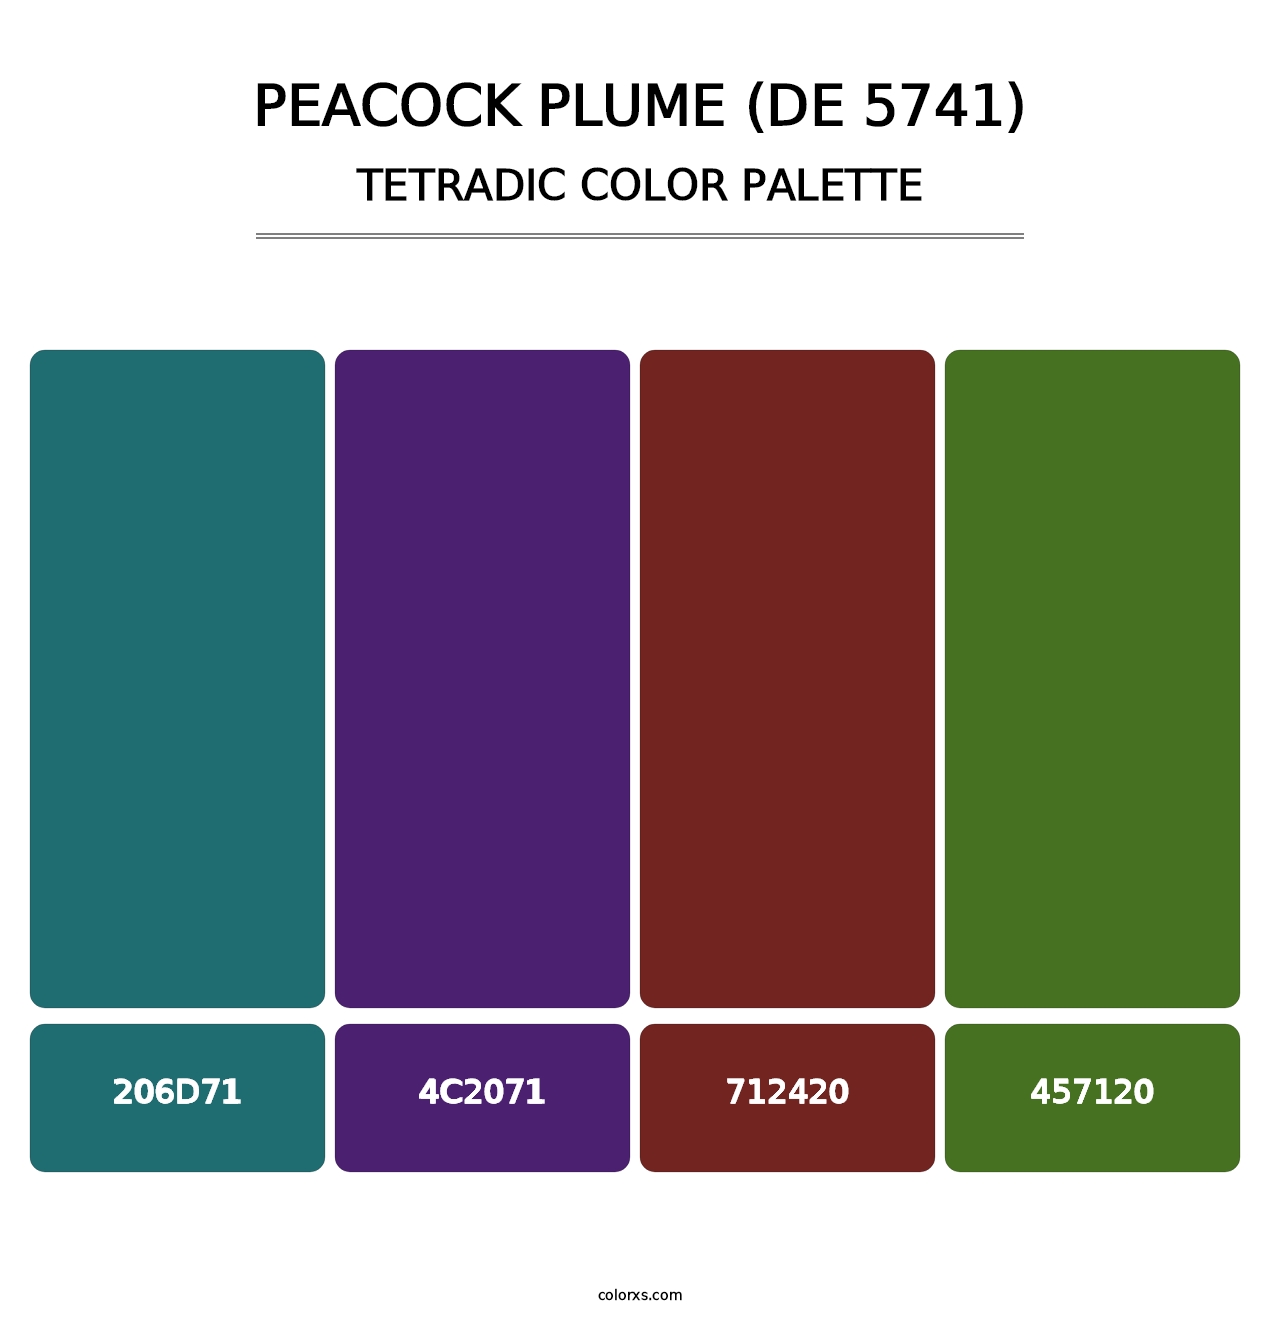 Peacock Plume (DE 5741) - Tetradic Color Palette